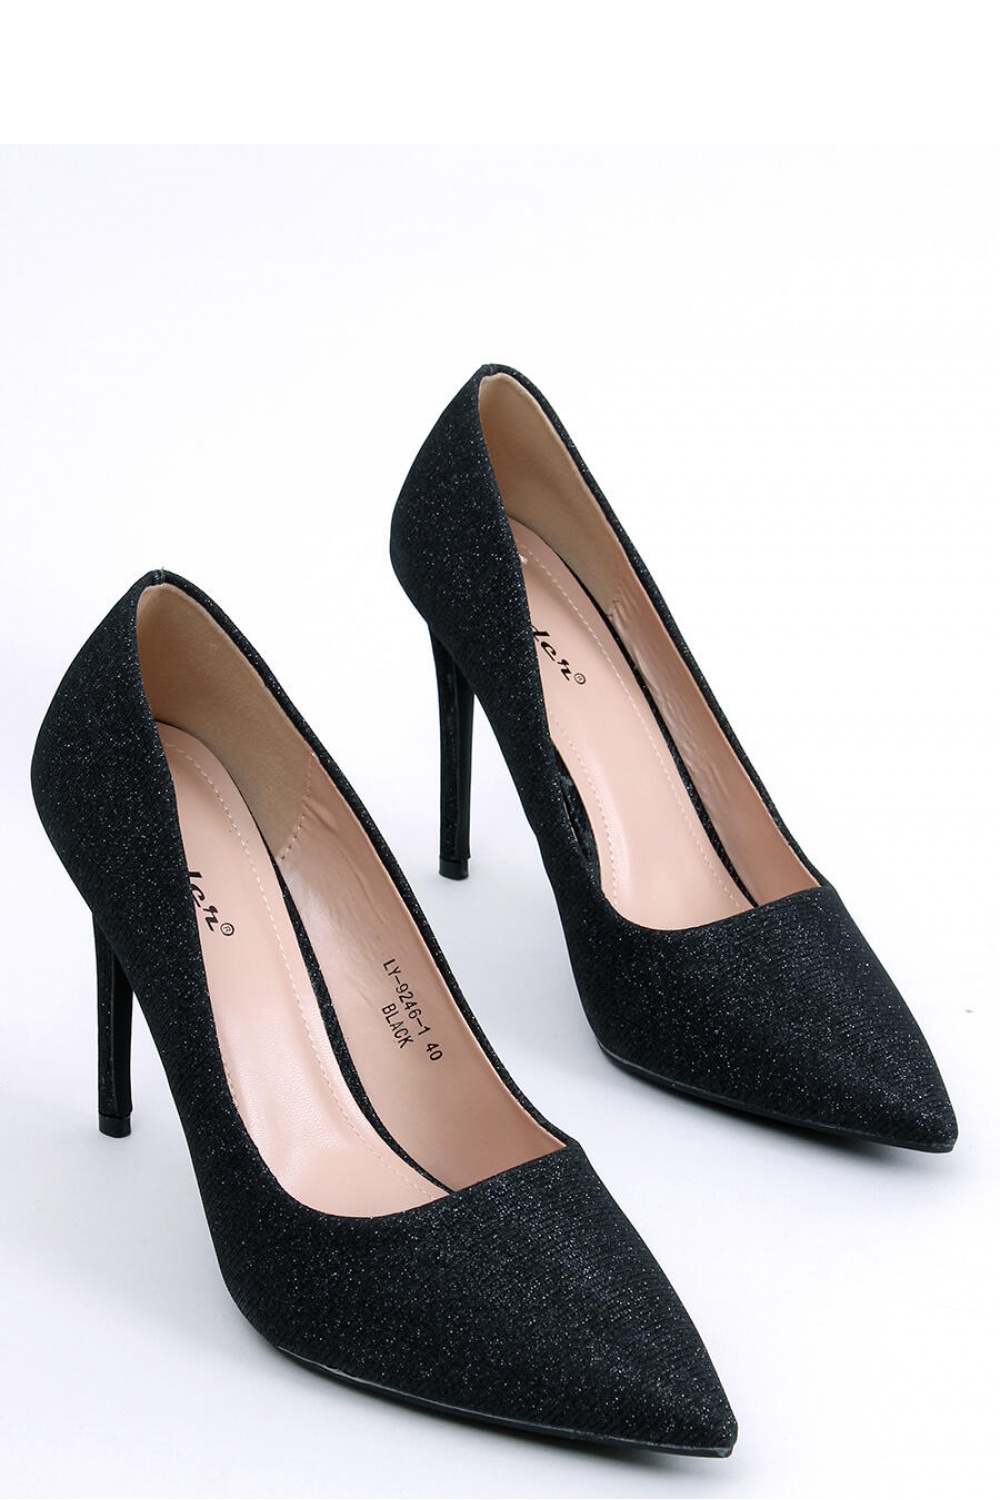  High heels model 174113 Inello  black